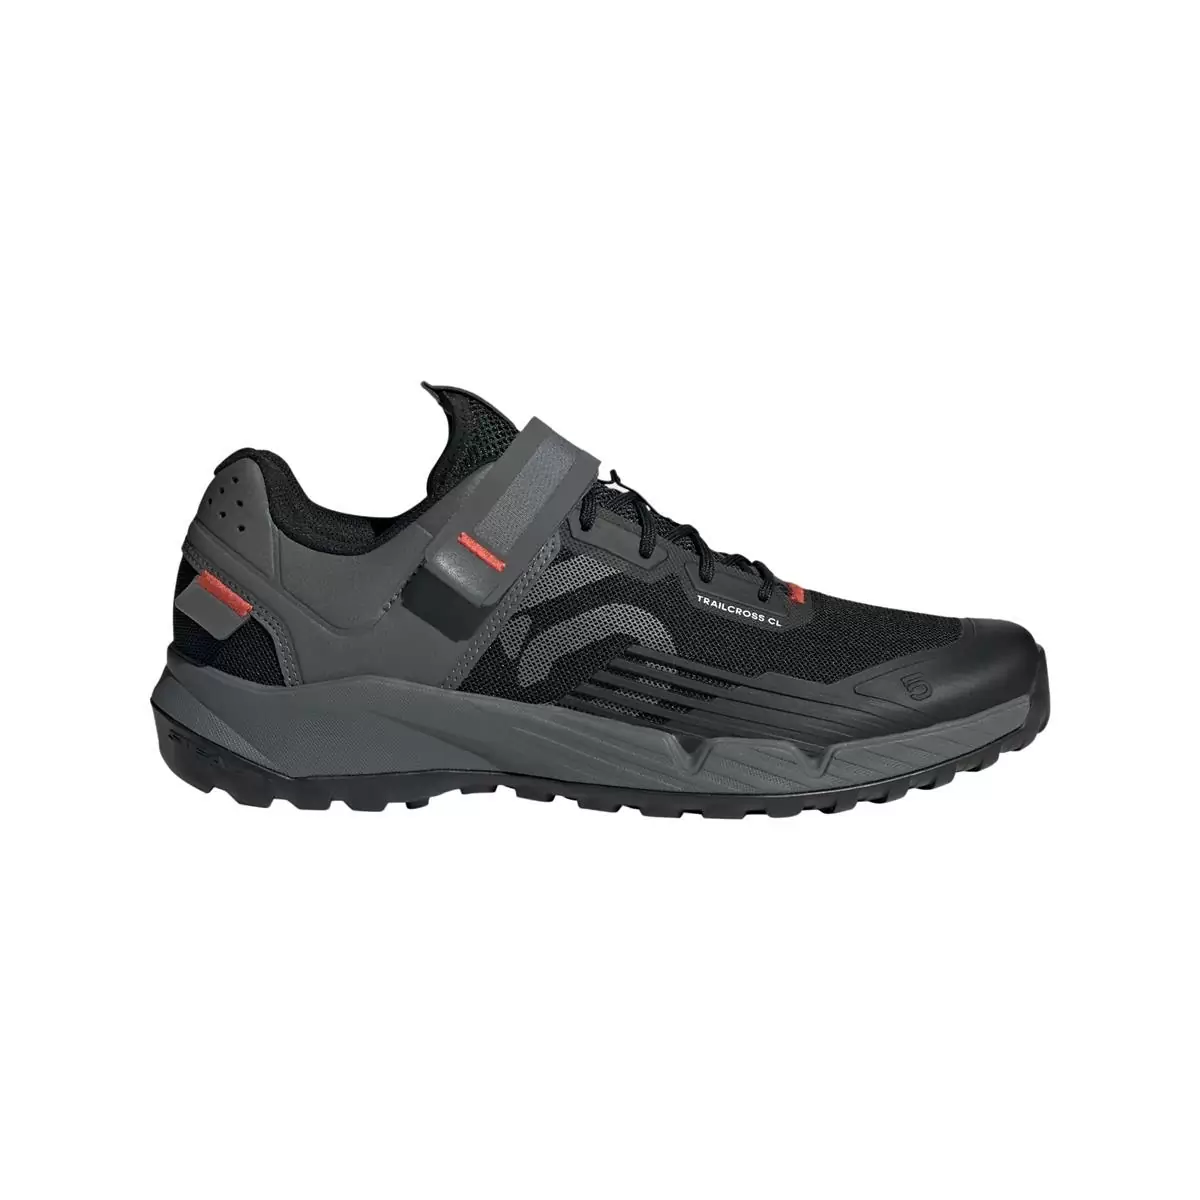 Clip 5.10 Trailcross MTB Shoes Black/Grey Size 40 - image